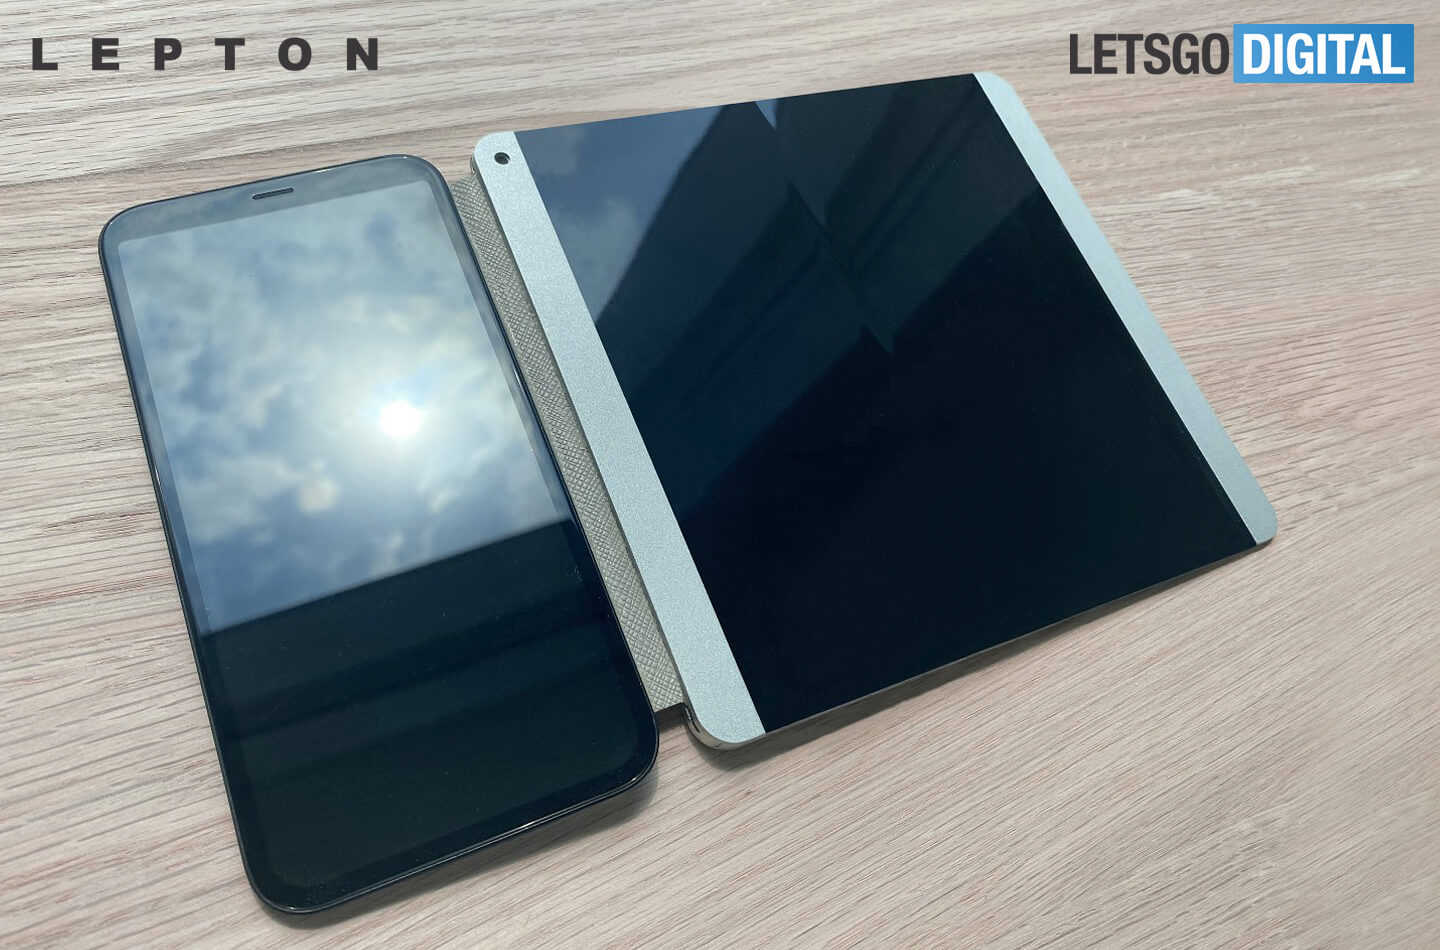 Lepton foldable smartphone